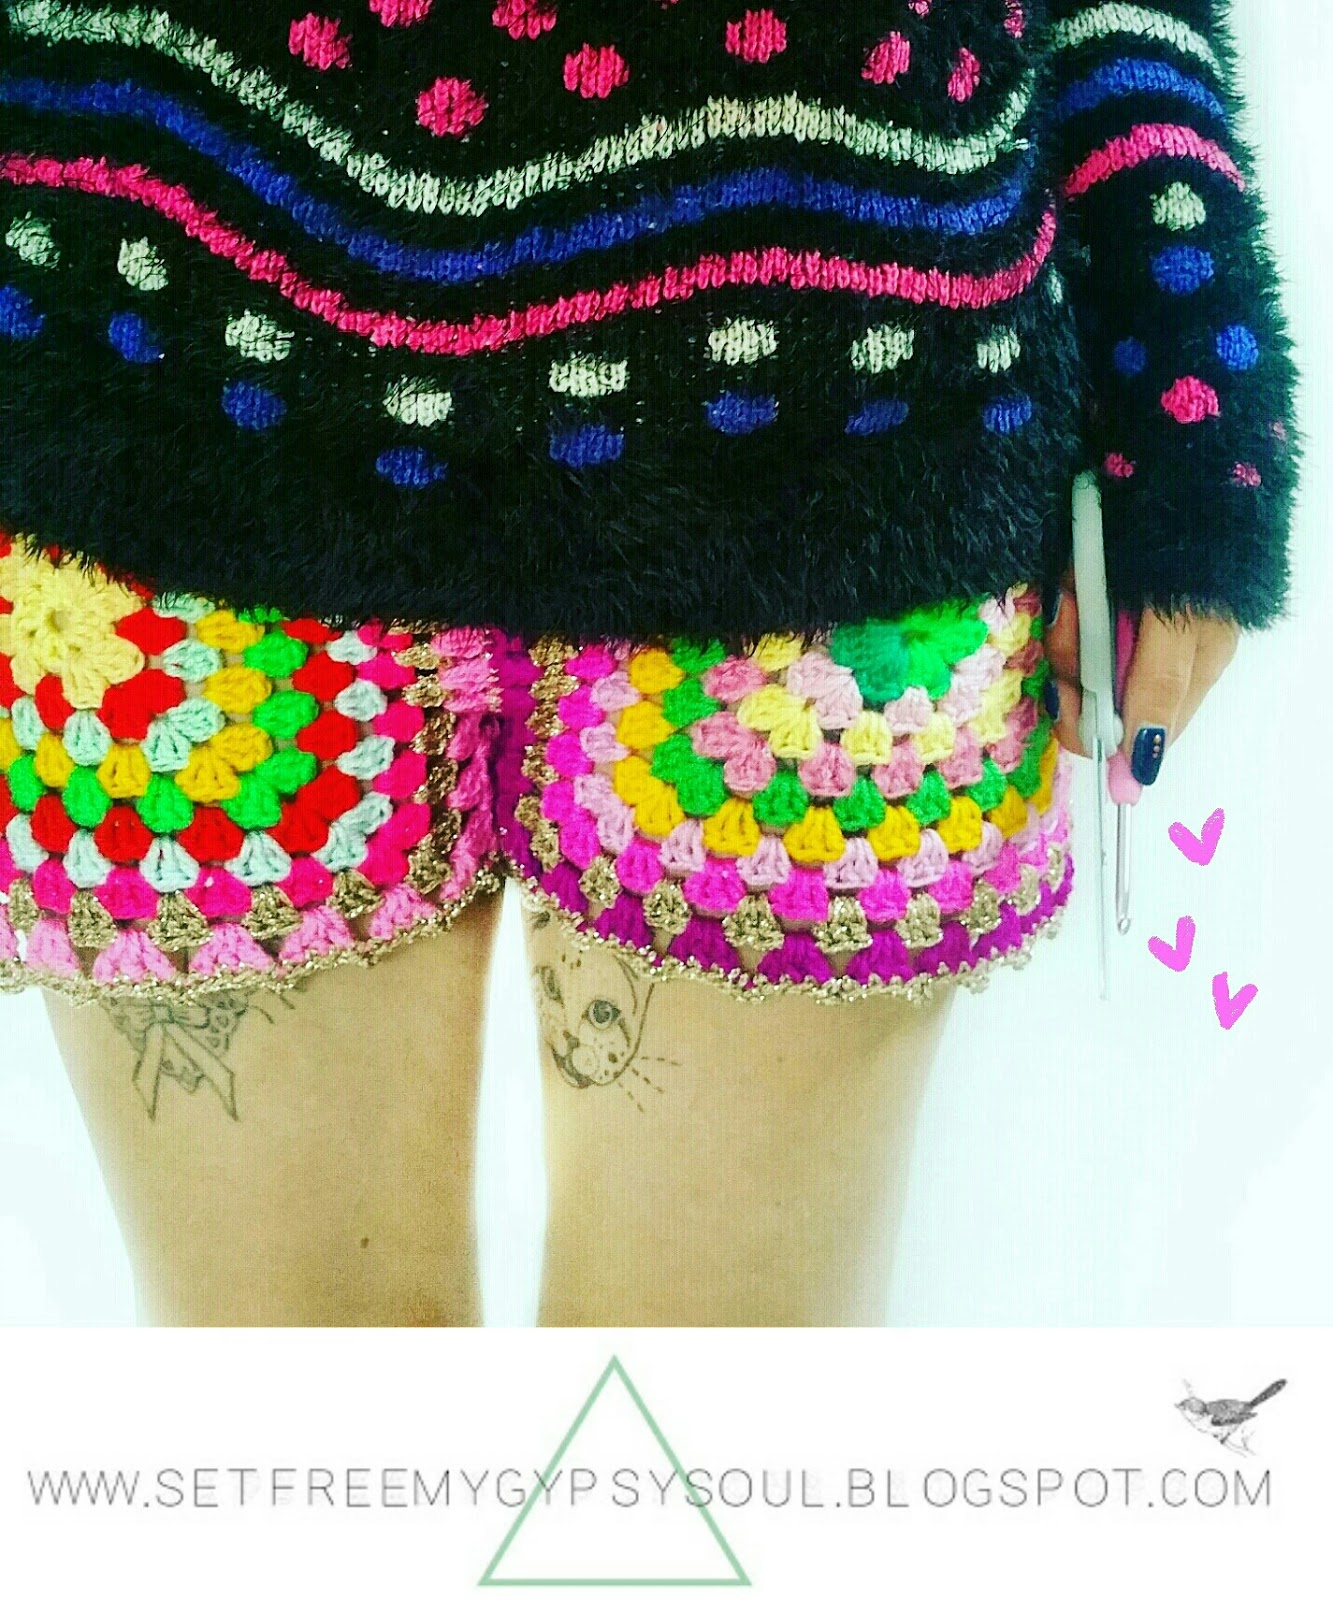 Shorts Crochet Pattern Set Free My Gypsy Soul A Crochet Craft Blog Granny Square